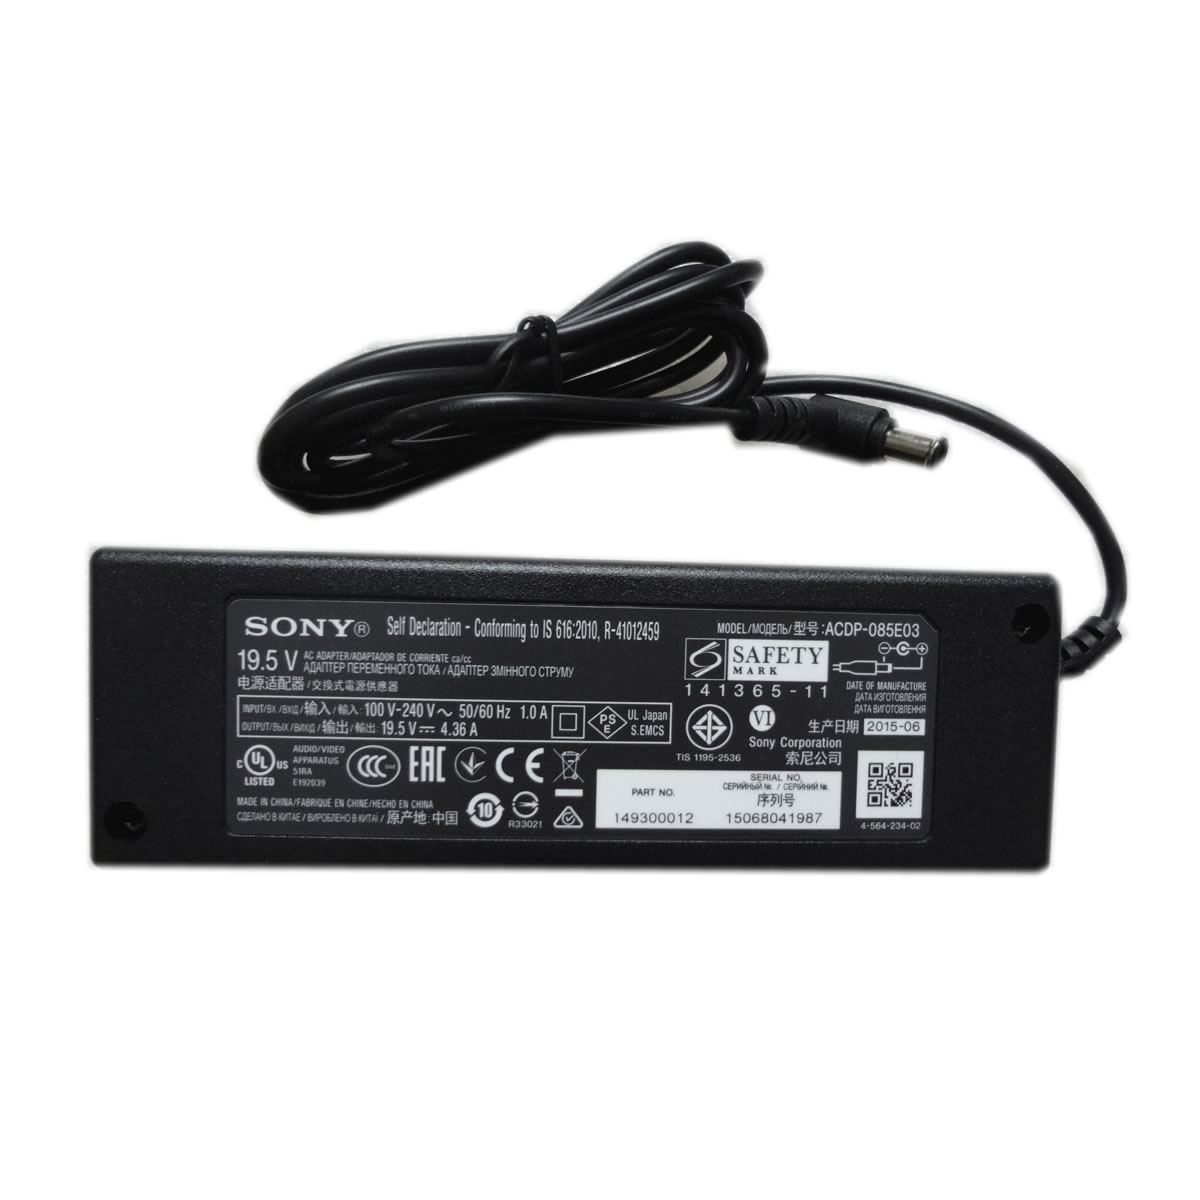 Sony ACDP-085E03 ACDP-085S01 chargeur 19.5V 4.36A 85W alimentation originale pour Sony KDL-48W650D, KLV32W512D séries